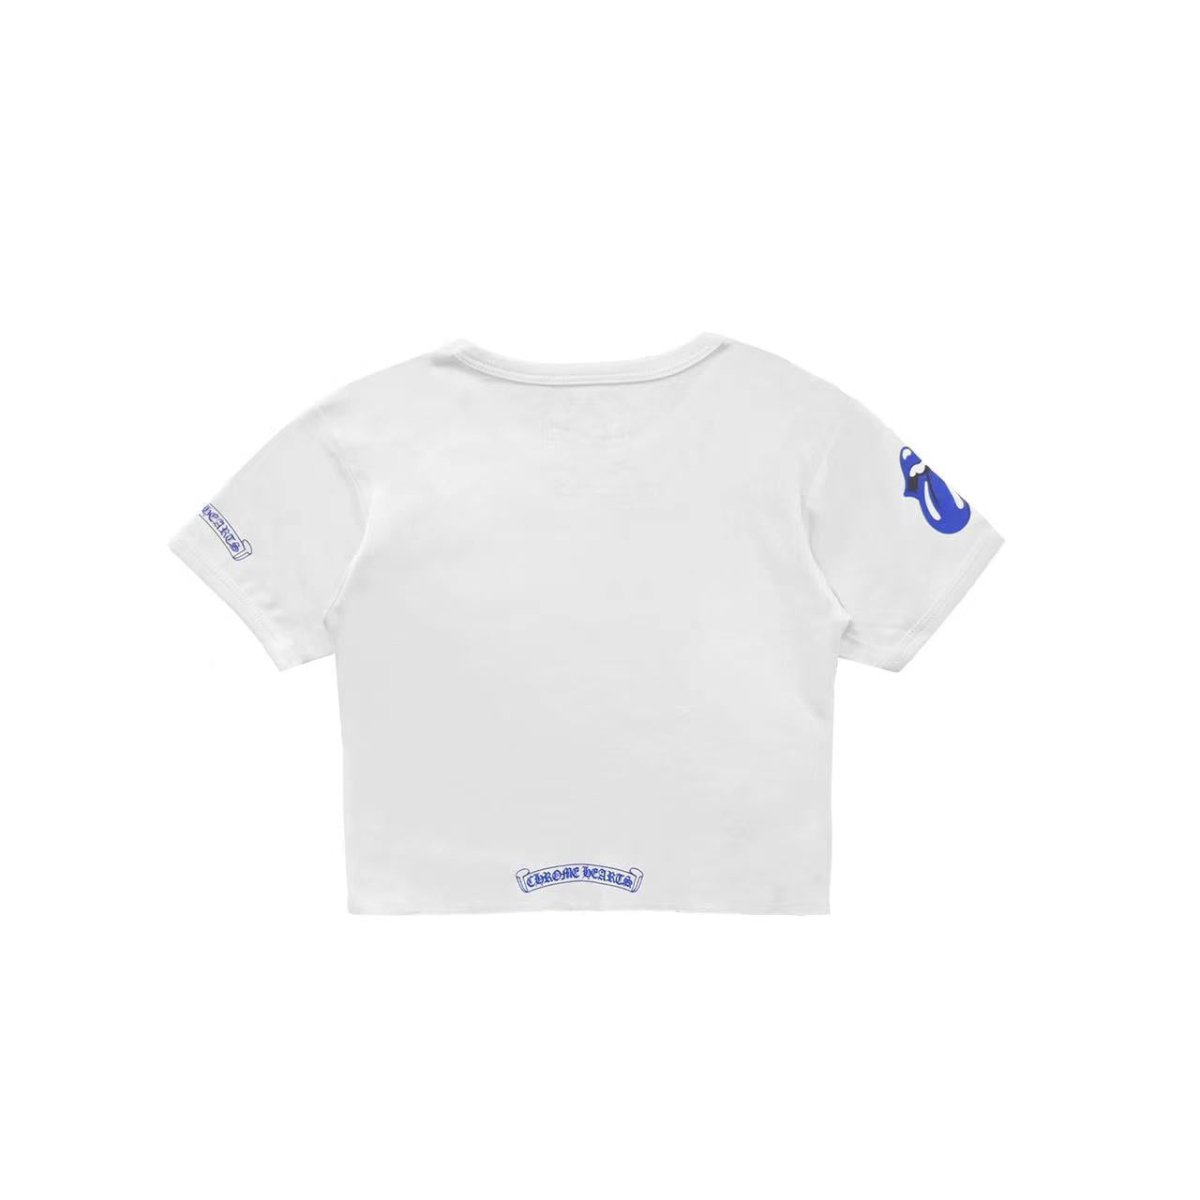 Chrome Hearts Rolling Stones Blue Neck Logo Baby Short Sleeve Tee Shirt - SHENGLI ROAD MARKET